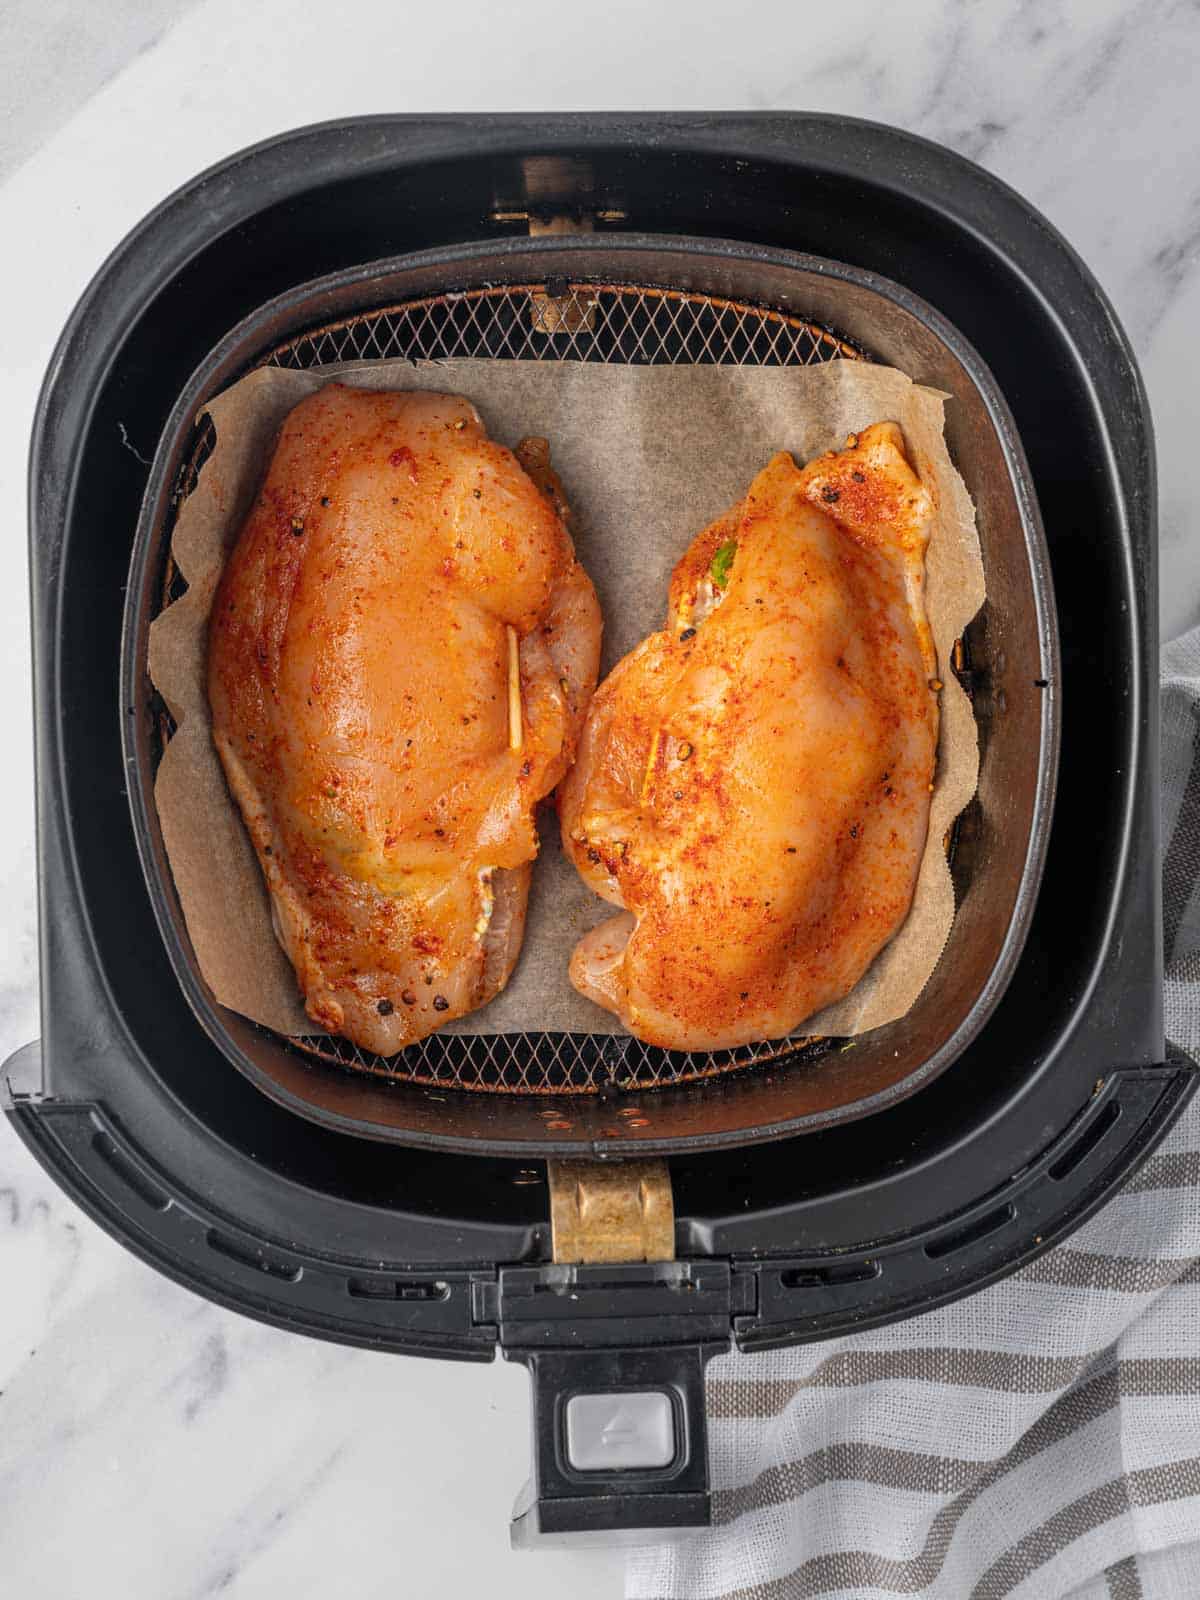 Raw stuffed chicken breast in an air fryer.